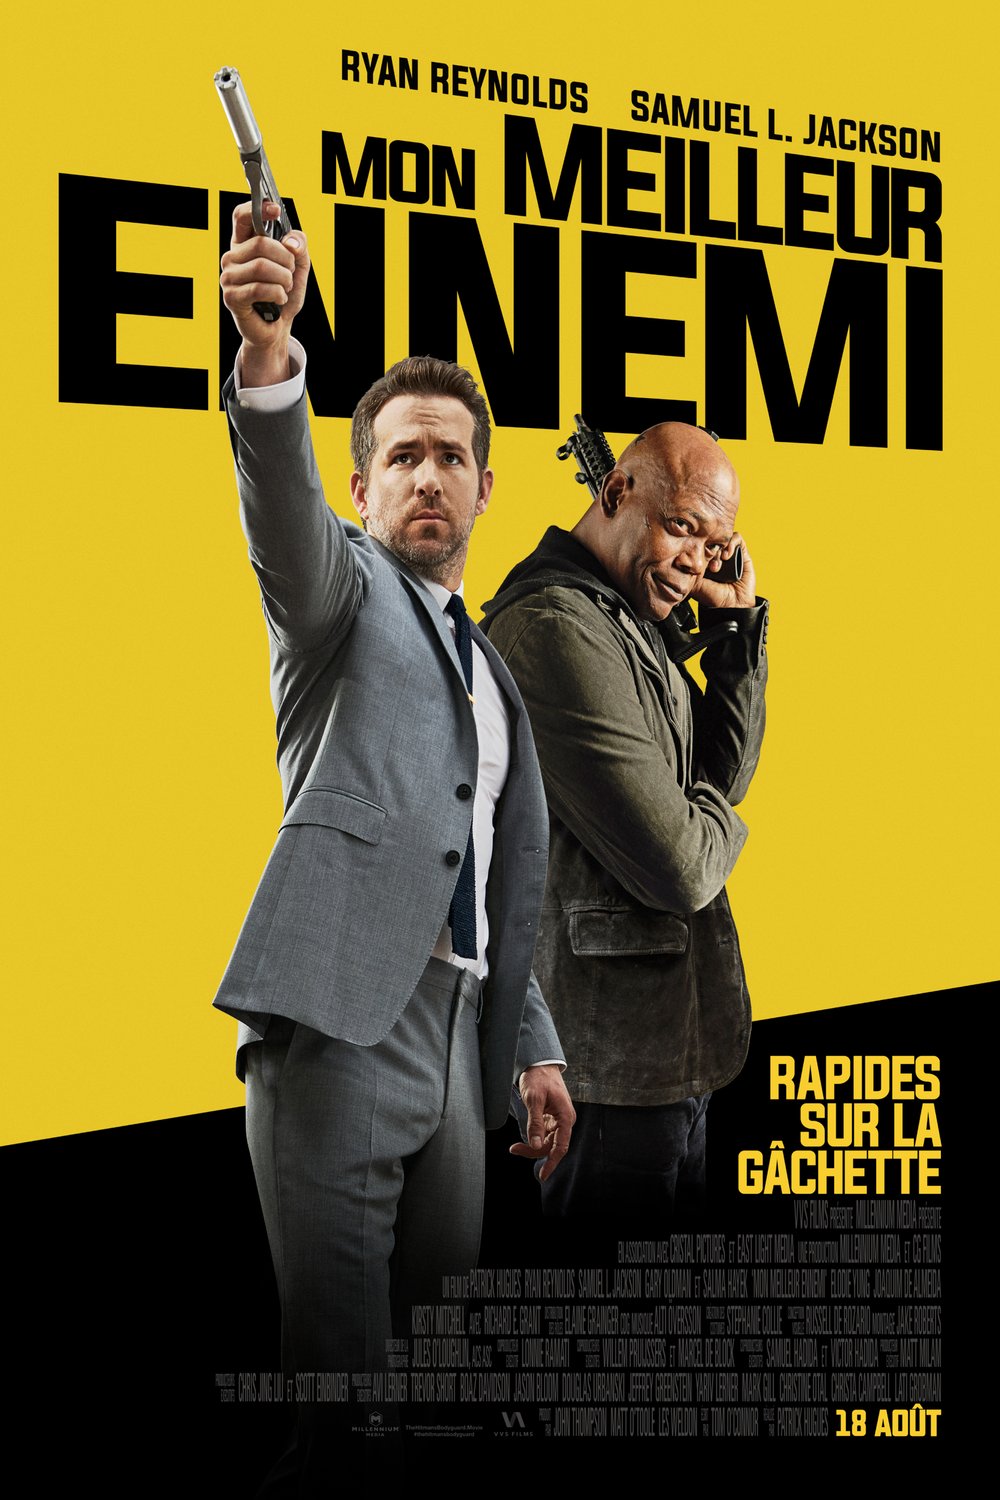 Poster of the movie Mon meilleur ennemi